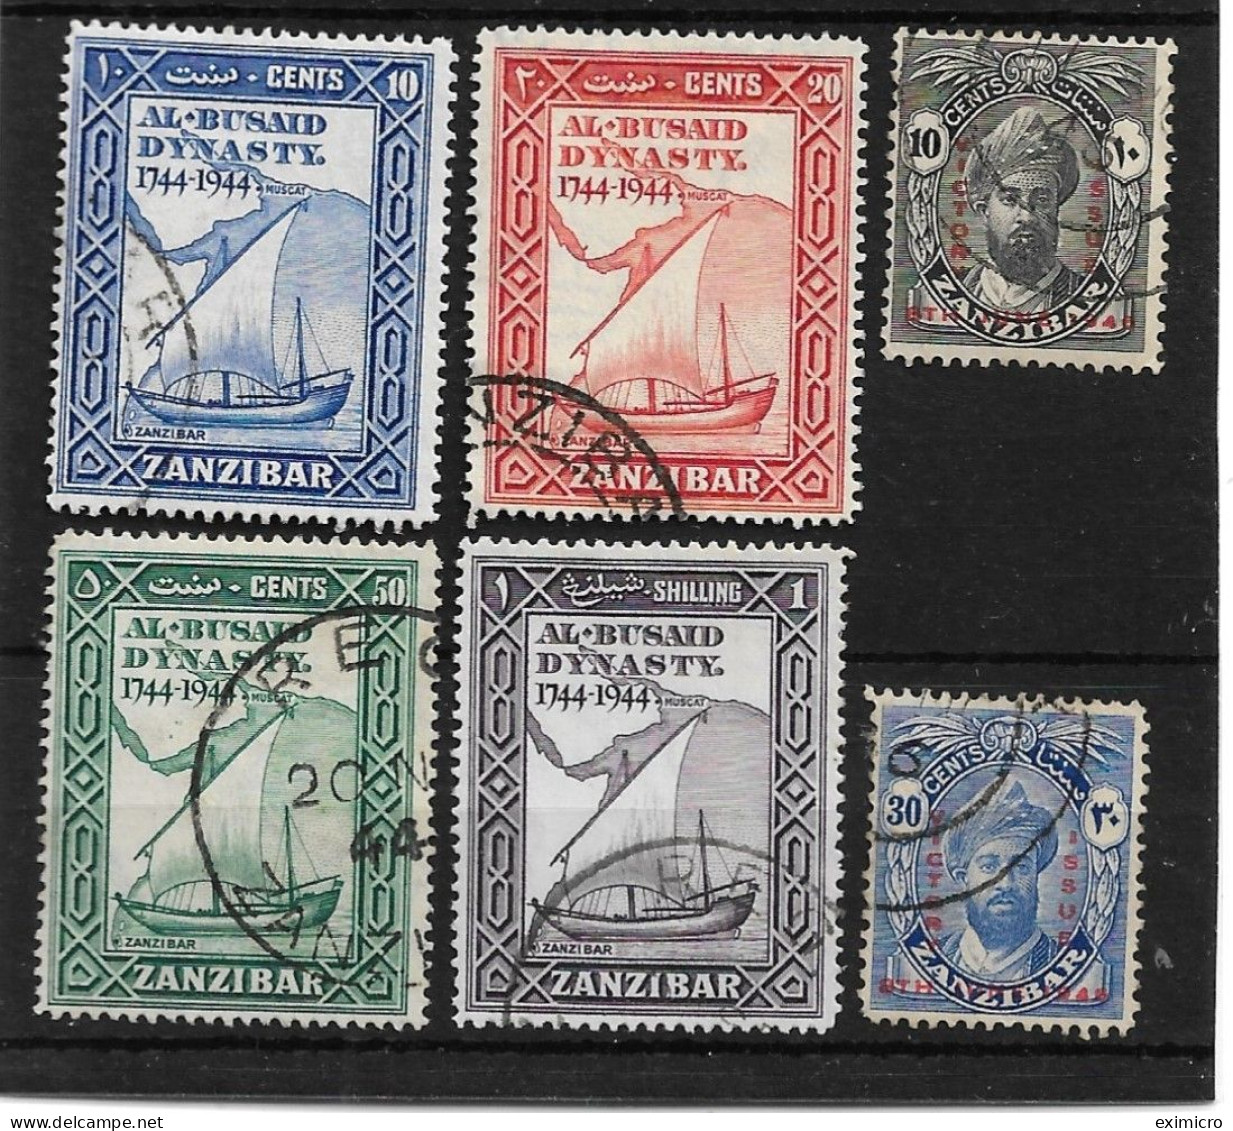 ZANZIBAR 1944 BICENTENARY AND 1946 VICTORY SETS SG 327/332 FINE USED Cat £12 - Zanzibar (...-1963)